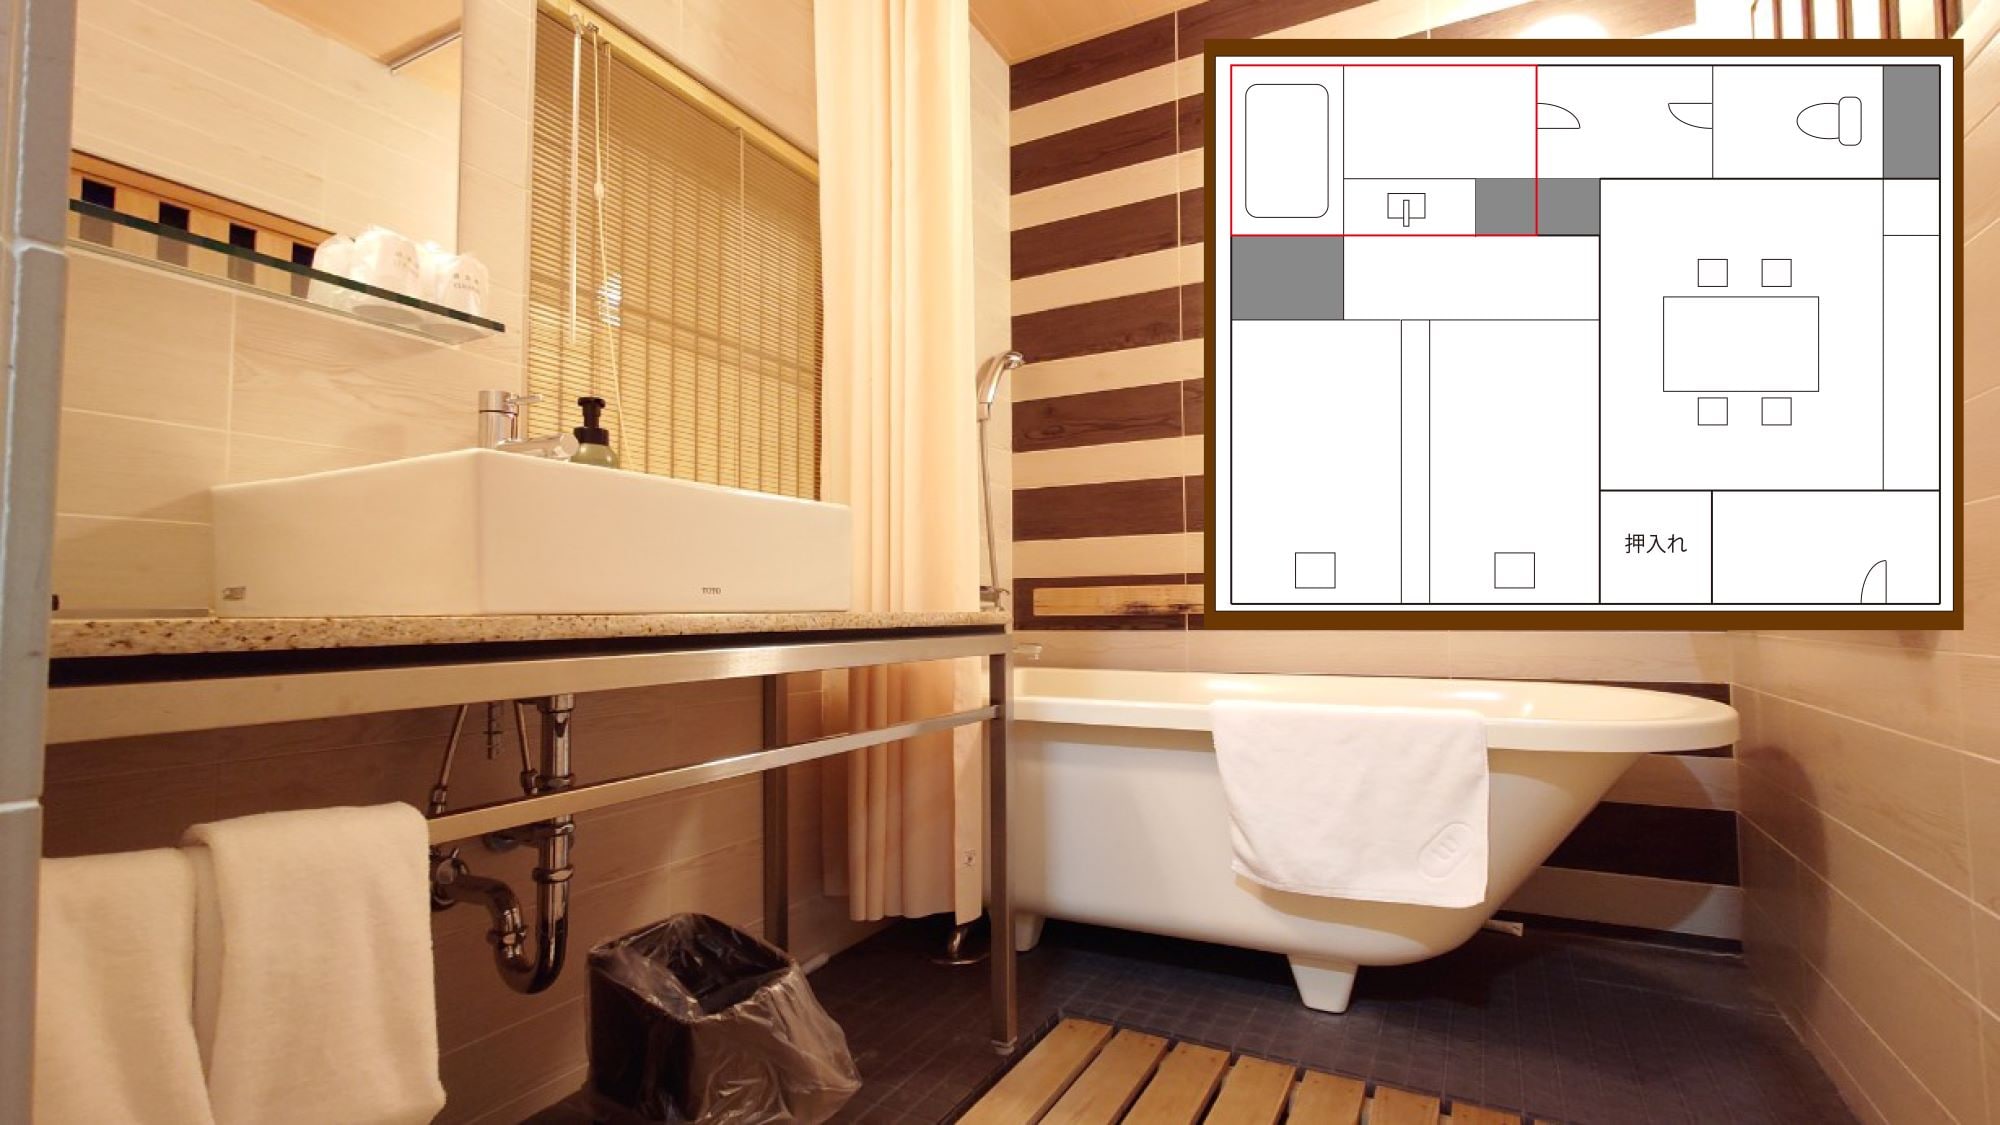 Japanese-Western style room layout (bathroom)